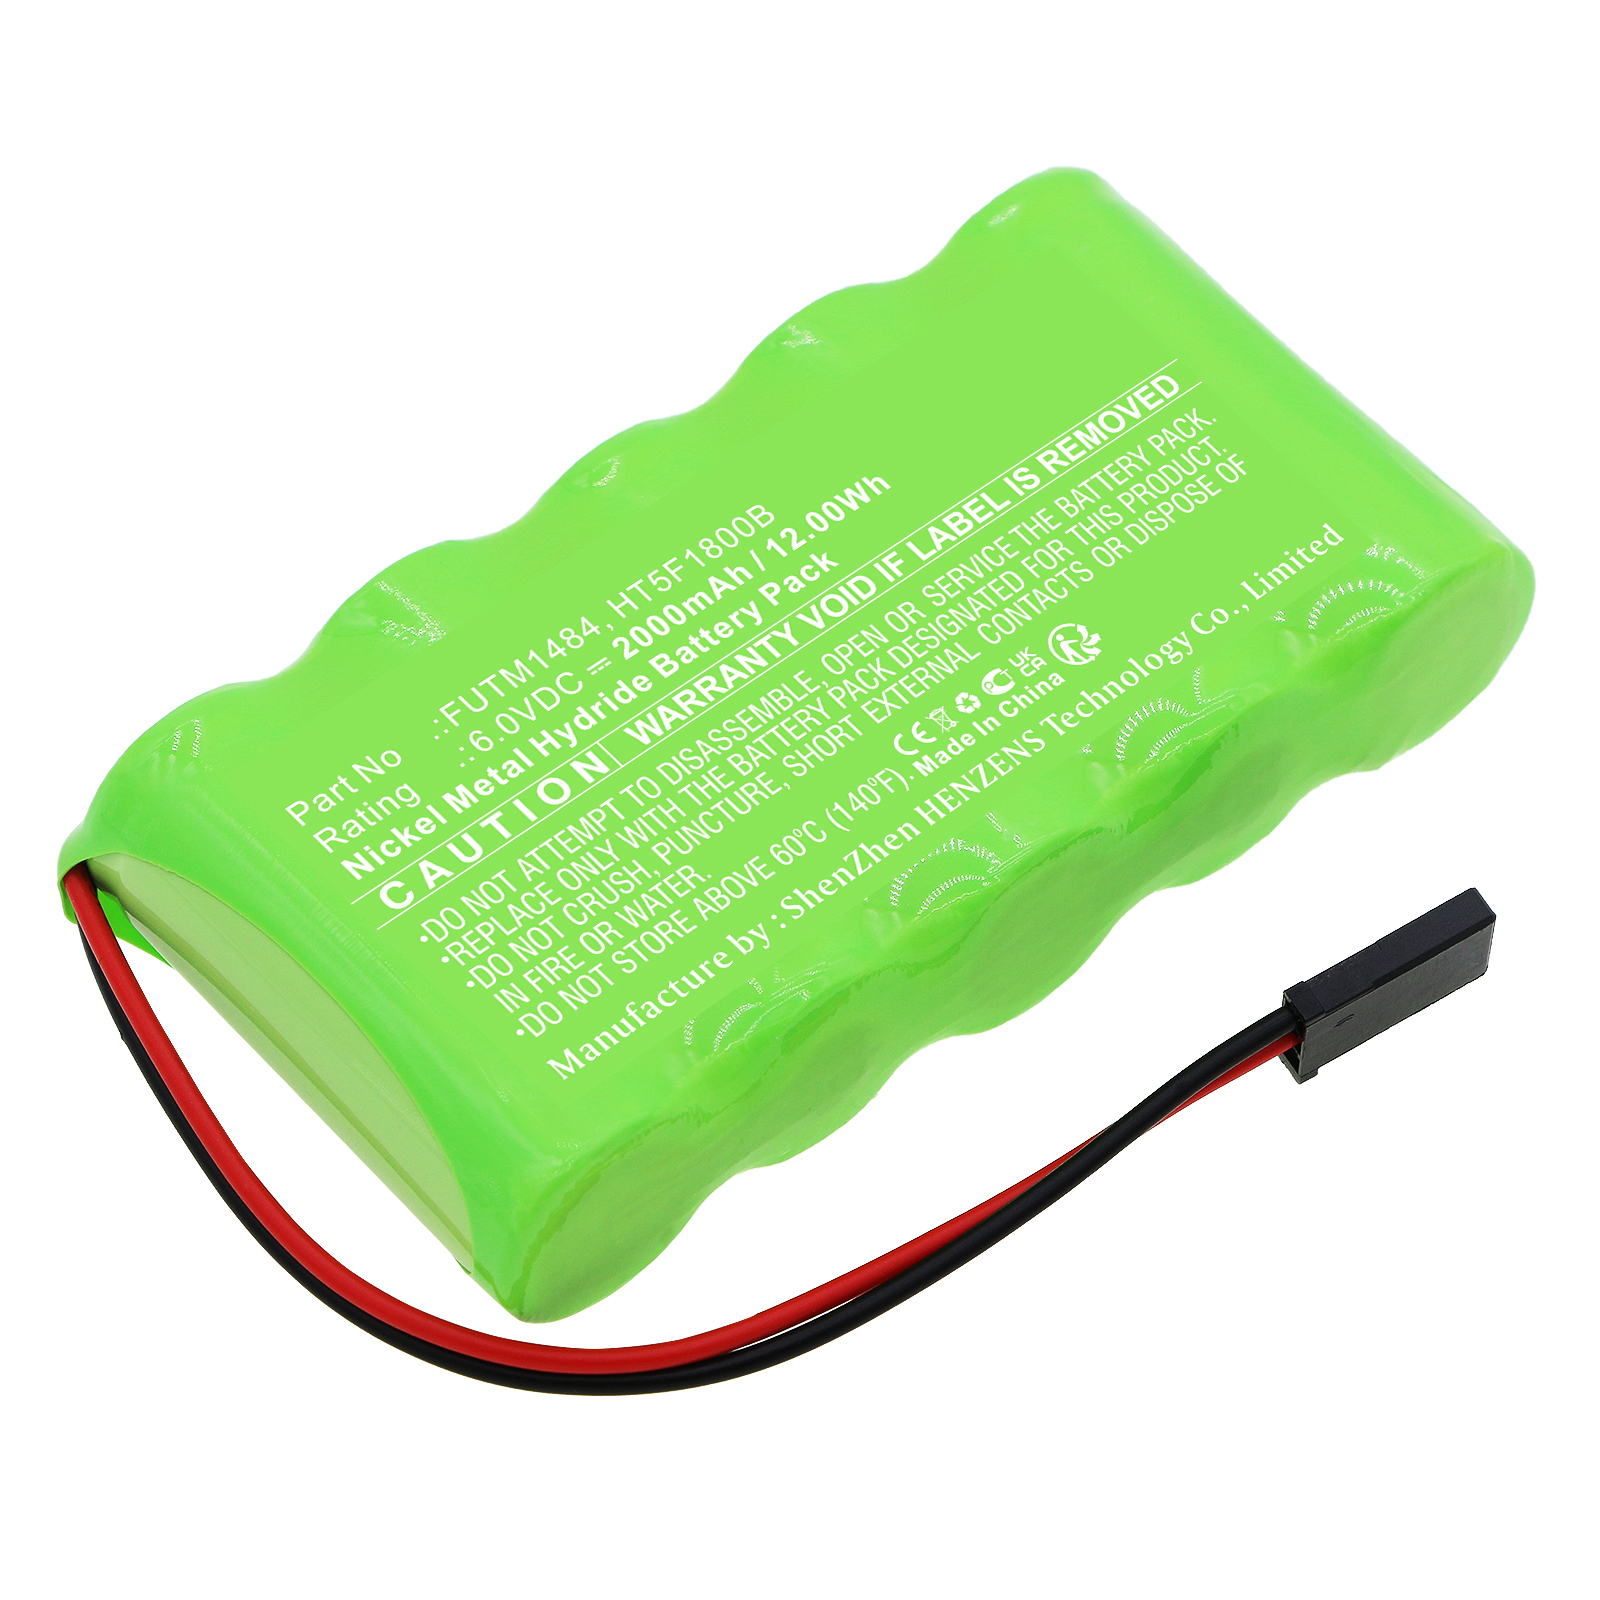 Synergy Digital Remote Control Battery, Compatible with FUTABA FUTM1484 Remote Control Battery (Ni-MH, 6V, 2000mAh)